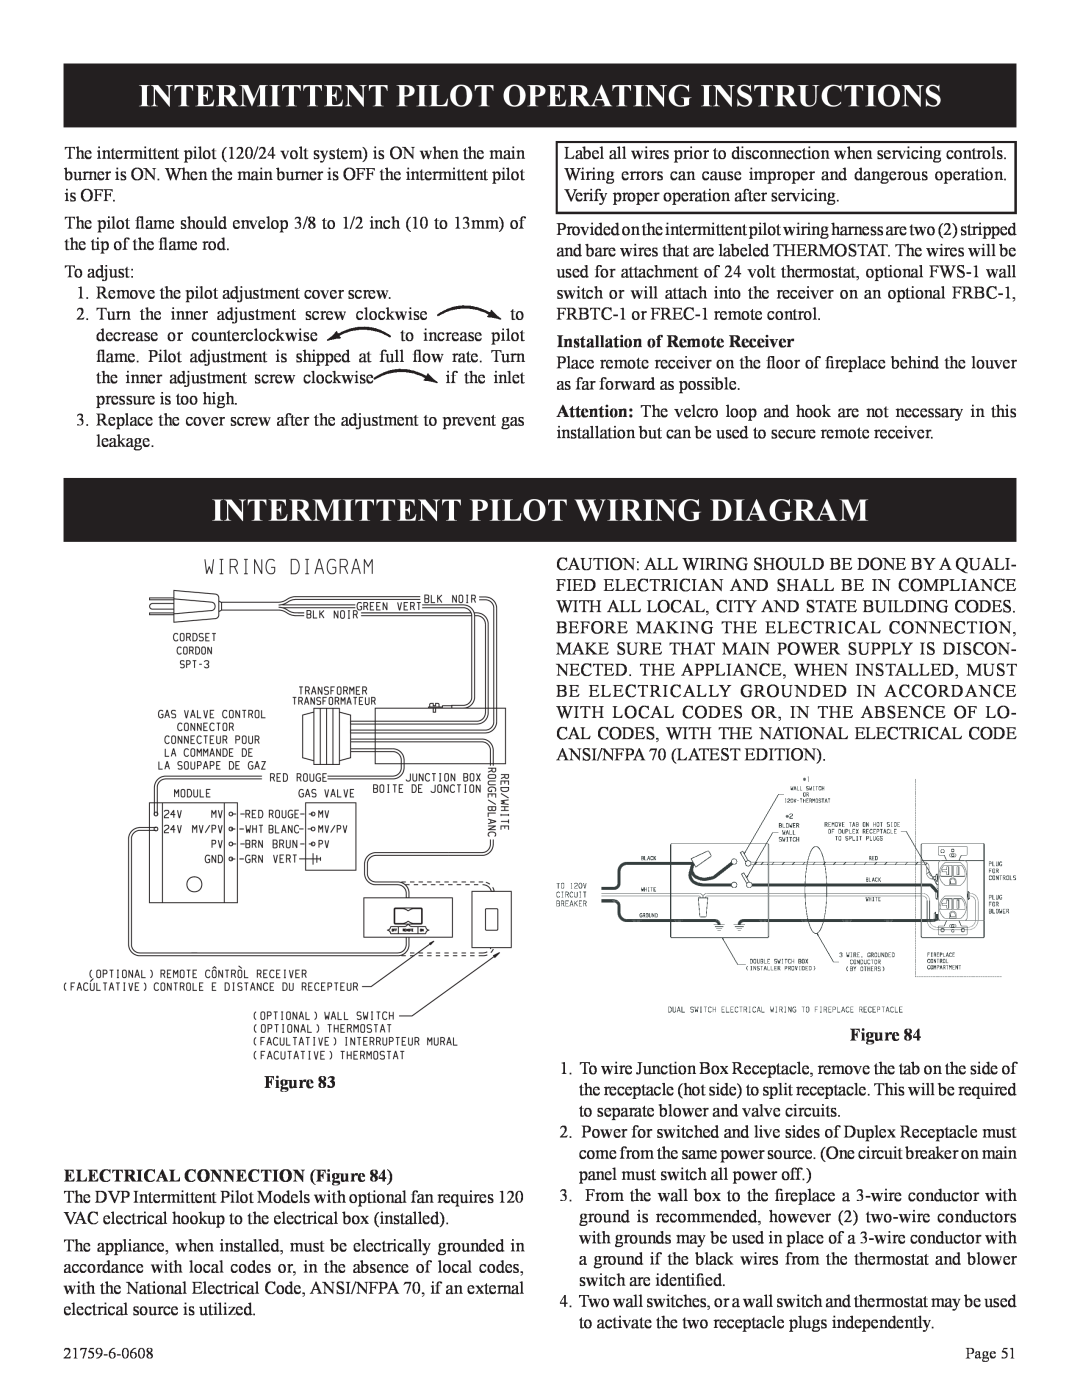 Empire Comfort Systems DVP42FP, P)-2 Intermittent Pilot Operating Instructions, Intermittent Pilot Wiring Diagram, Figure 